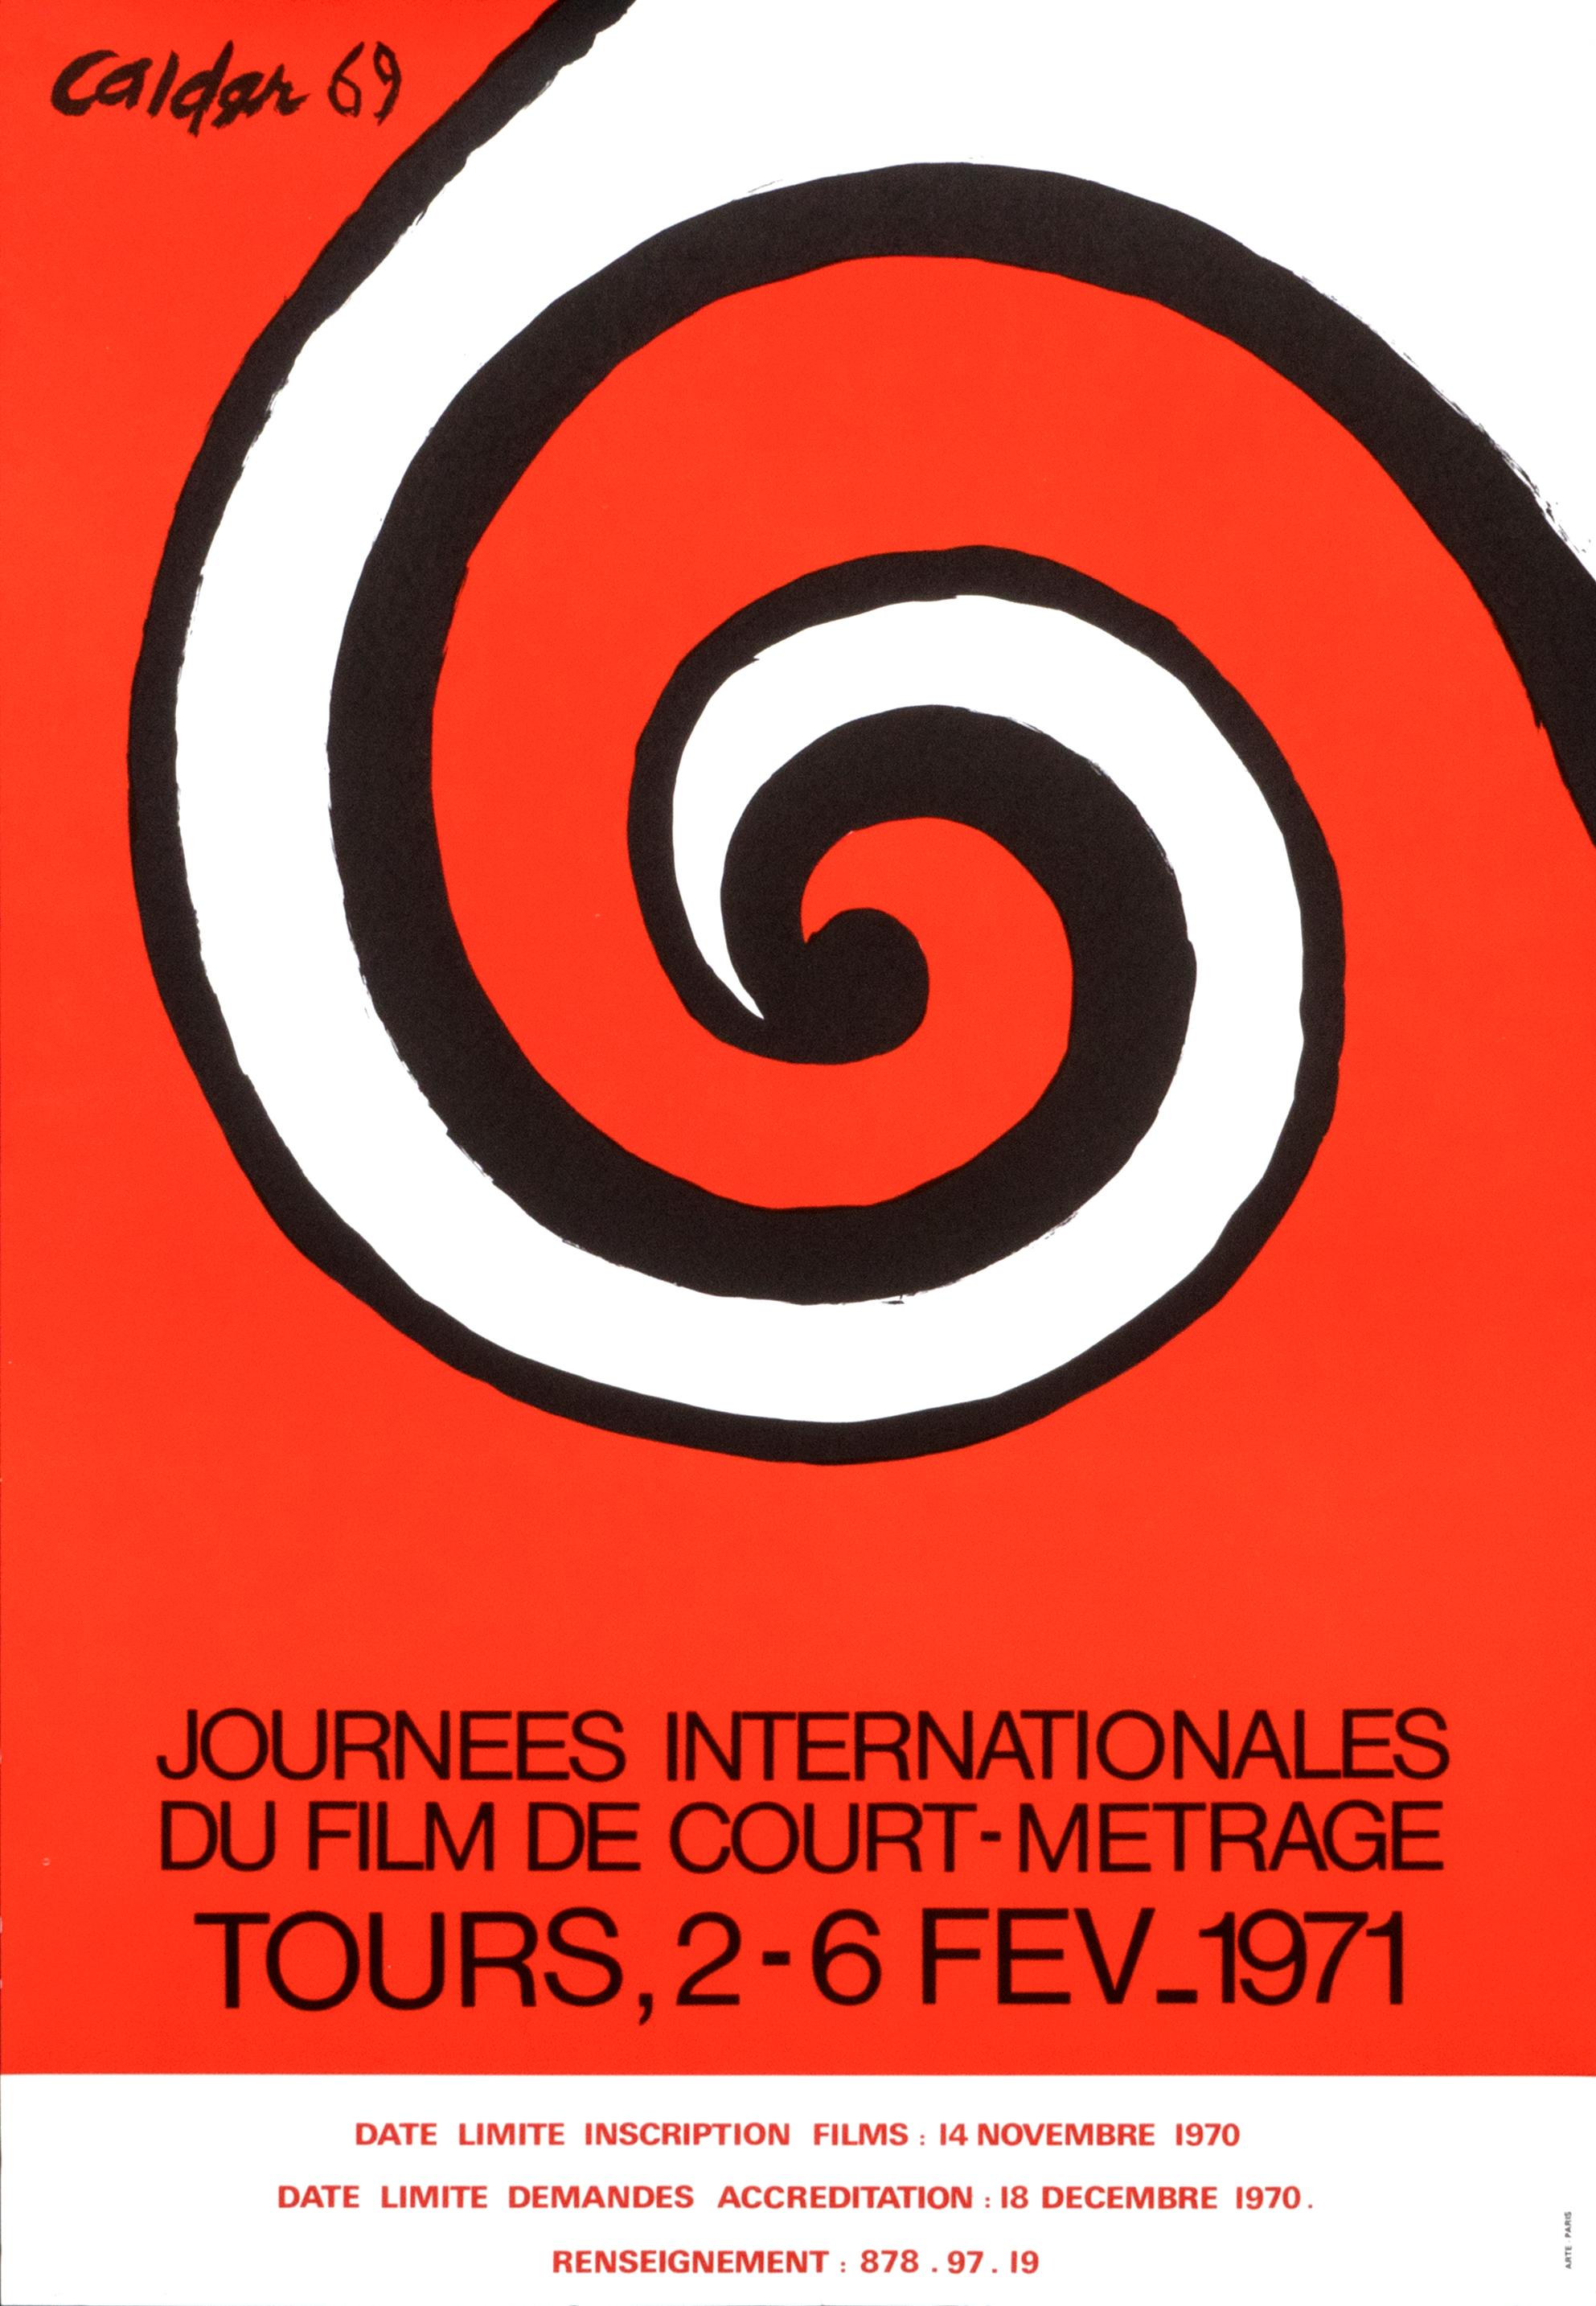 "Journees Internationales du film de court-metrage" After Calder Original Poster - Print by Alexander Calder